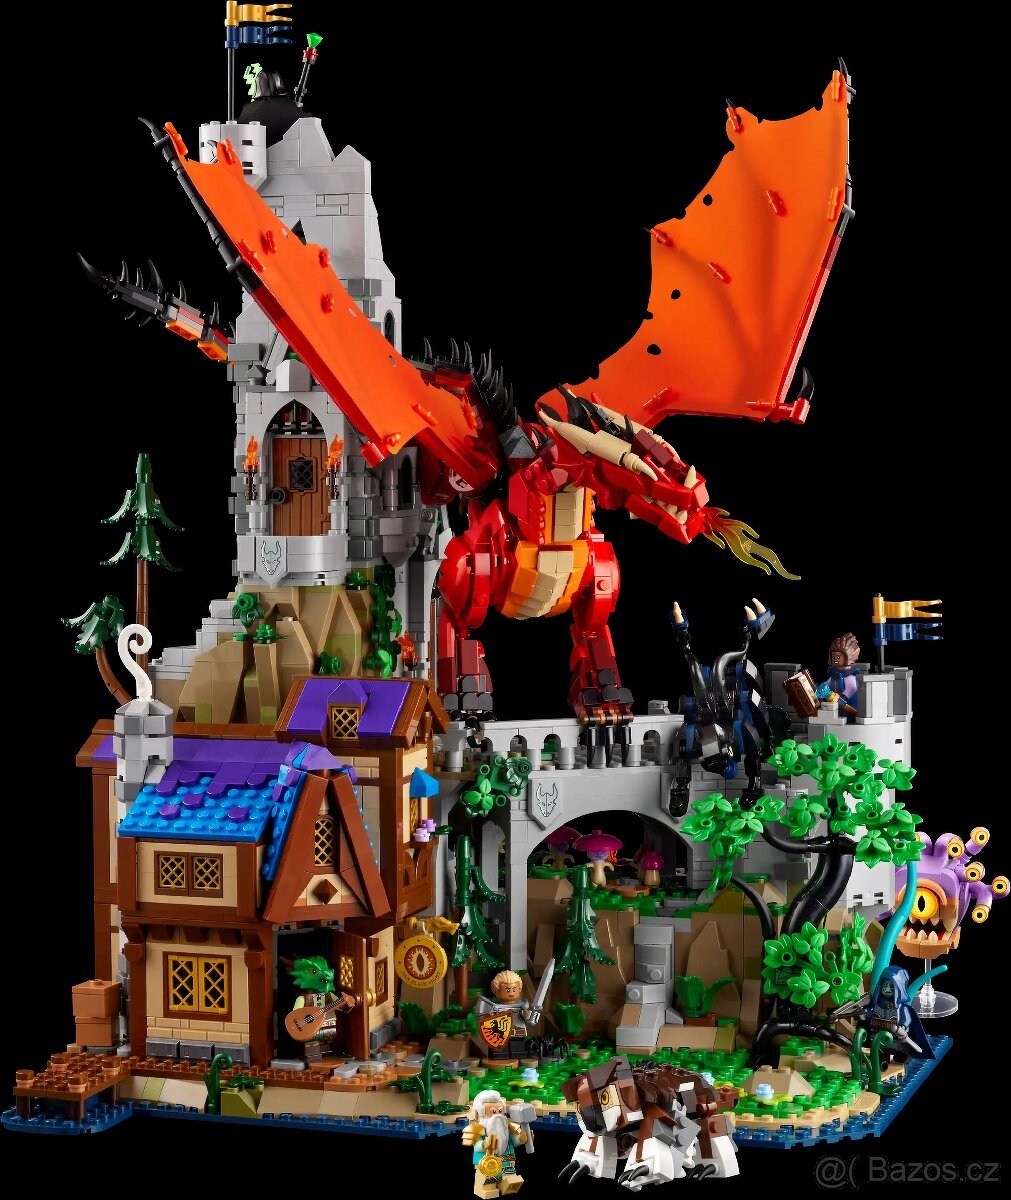 Lego 21348 Dungeons & Dragons: Příběh Rudého draka

